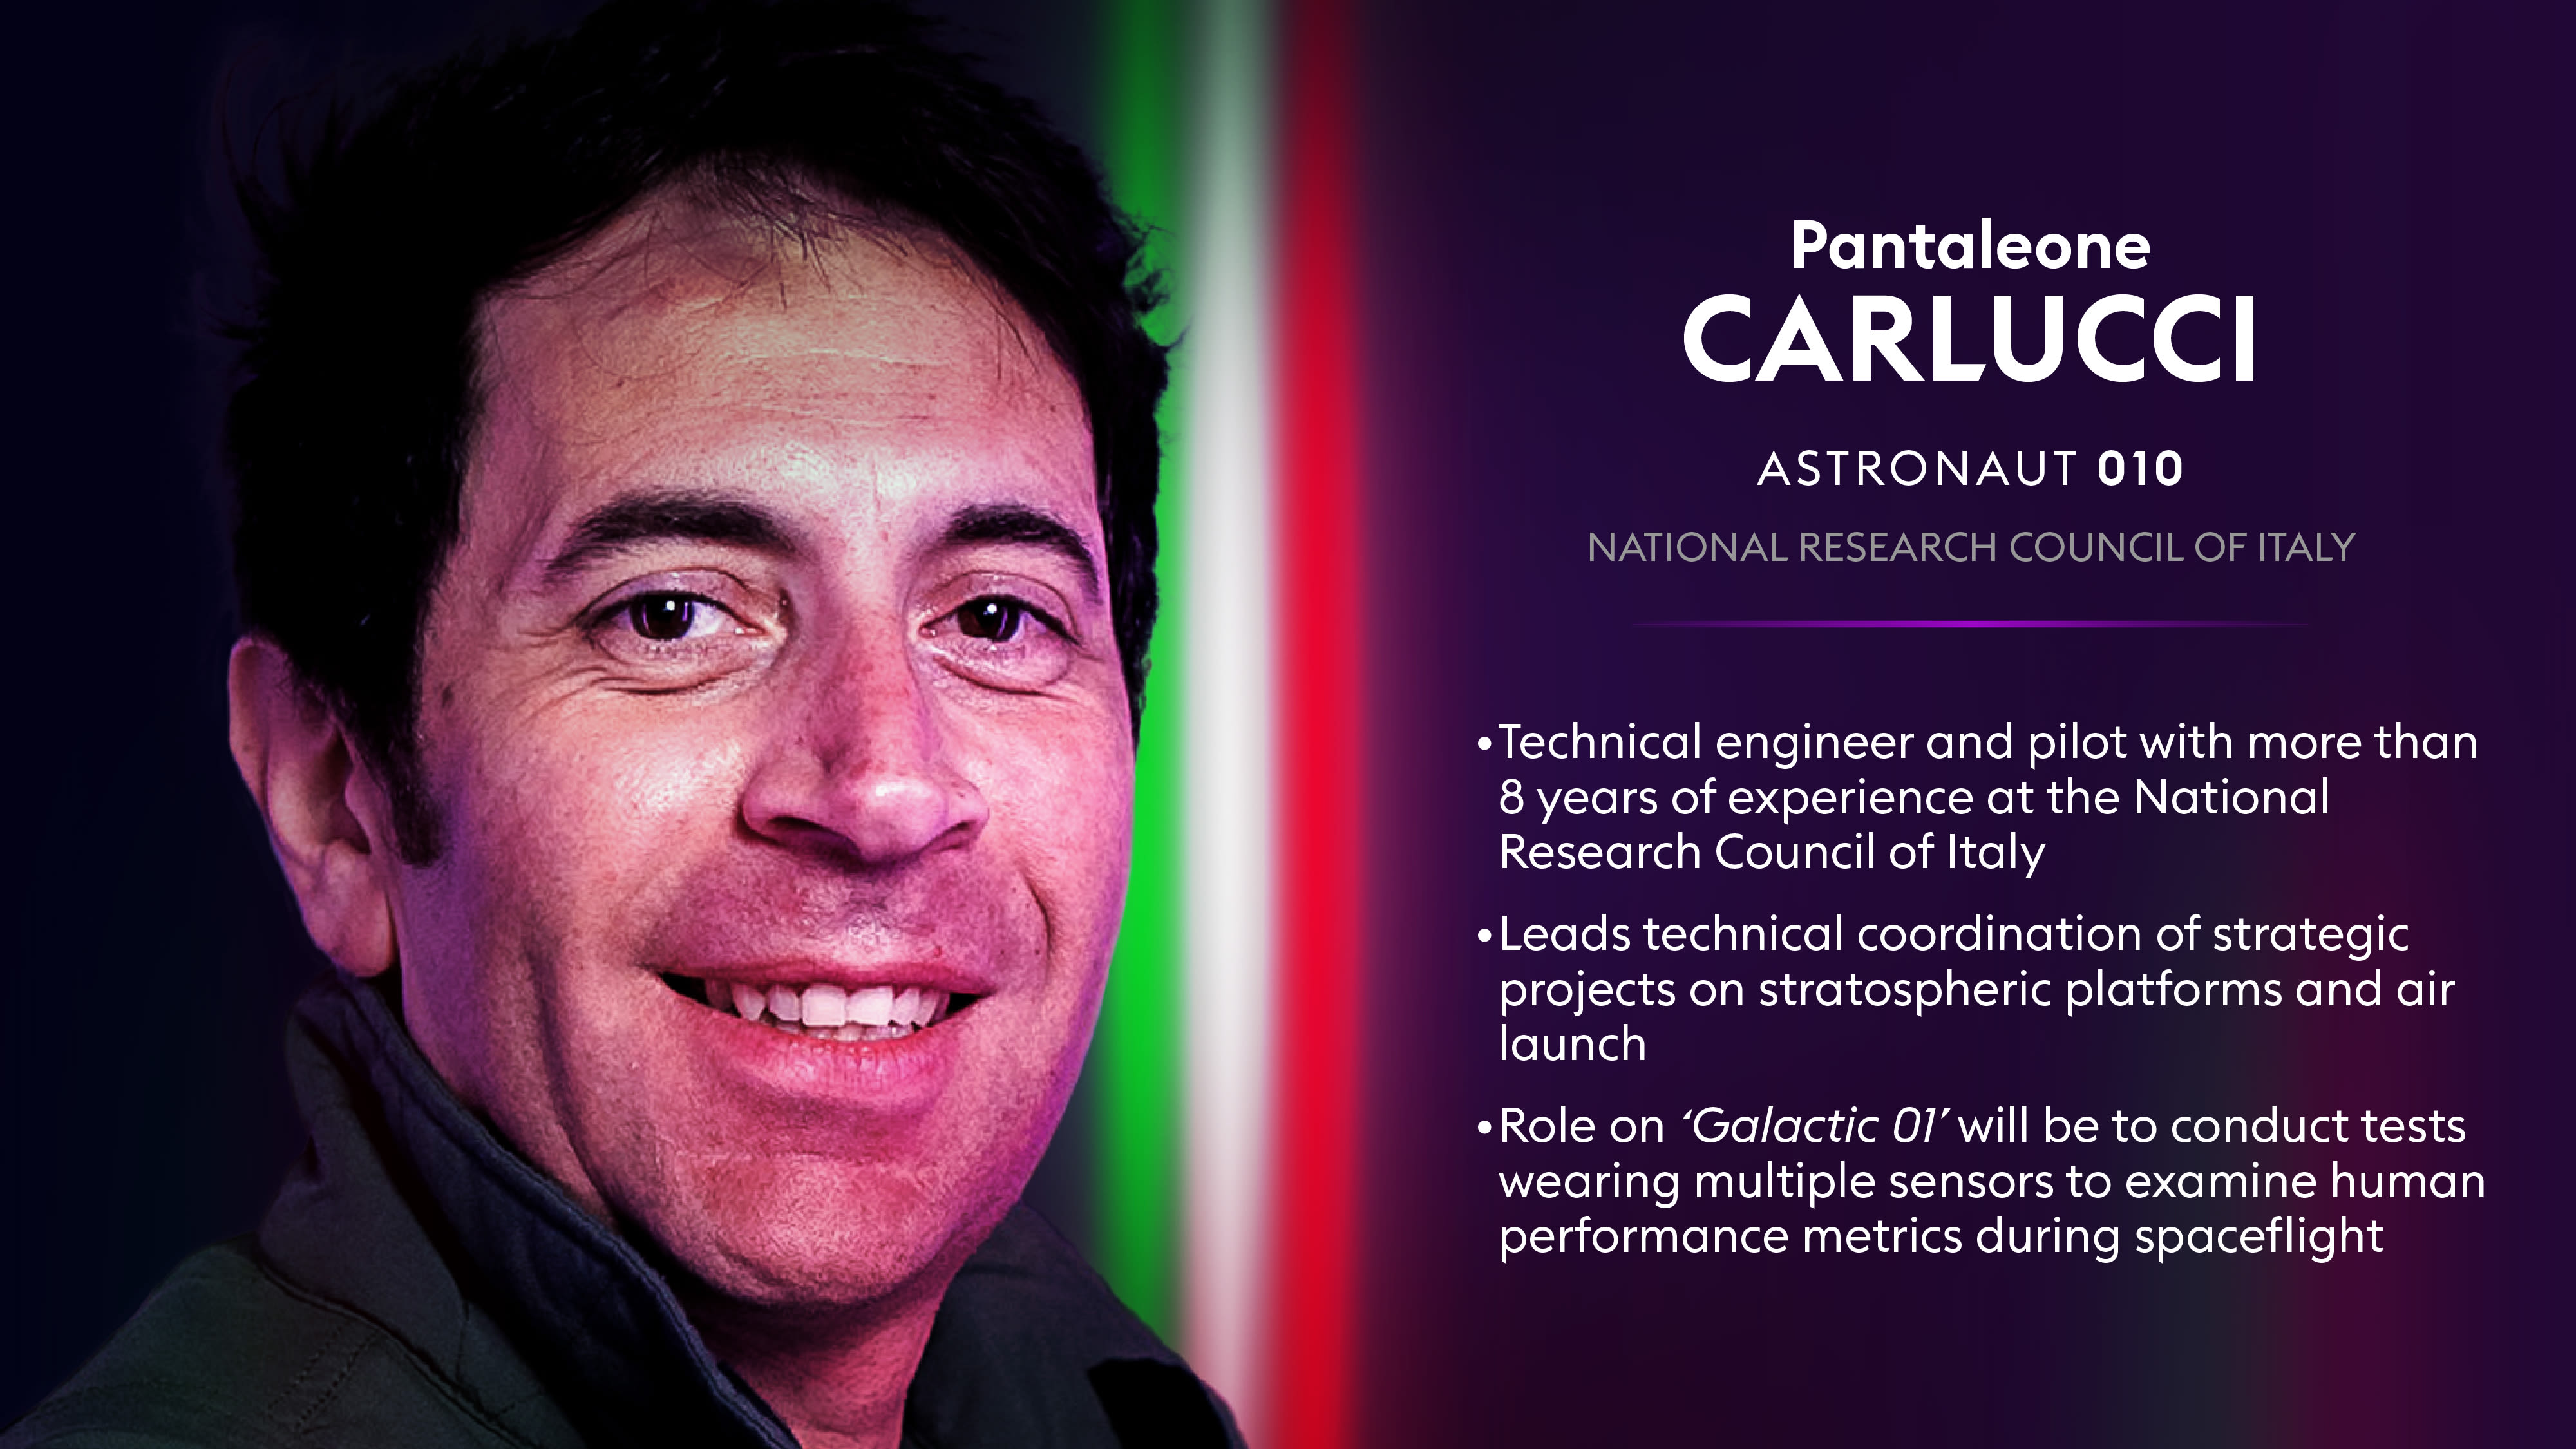 Virgin Galactic's Galactic 01 space mission crew member, Pantaleone Carlucci 